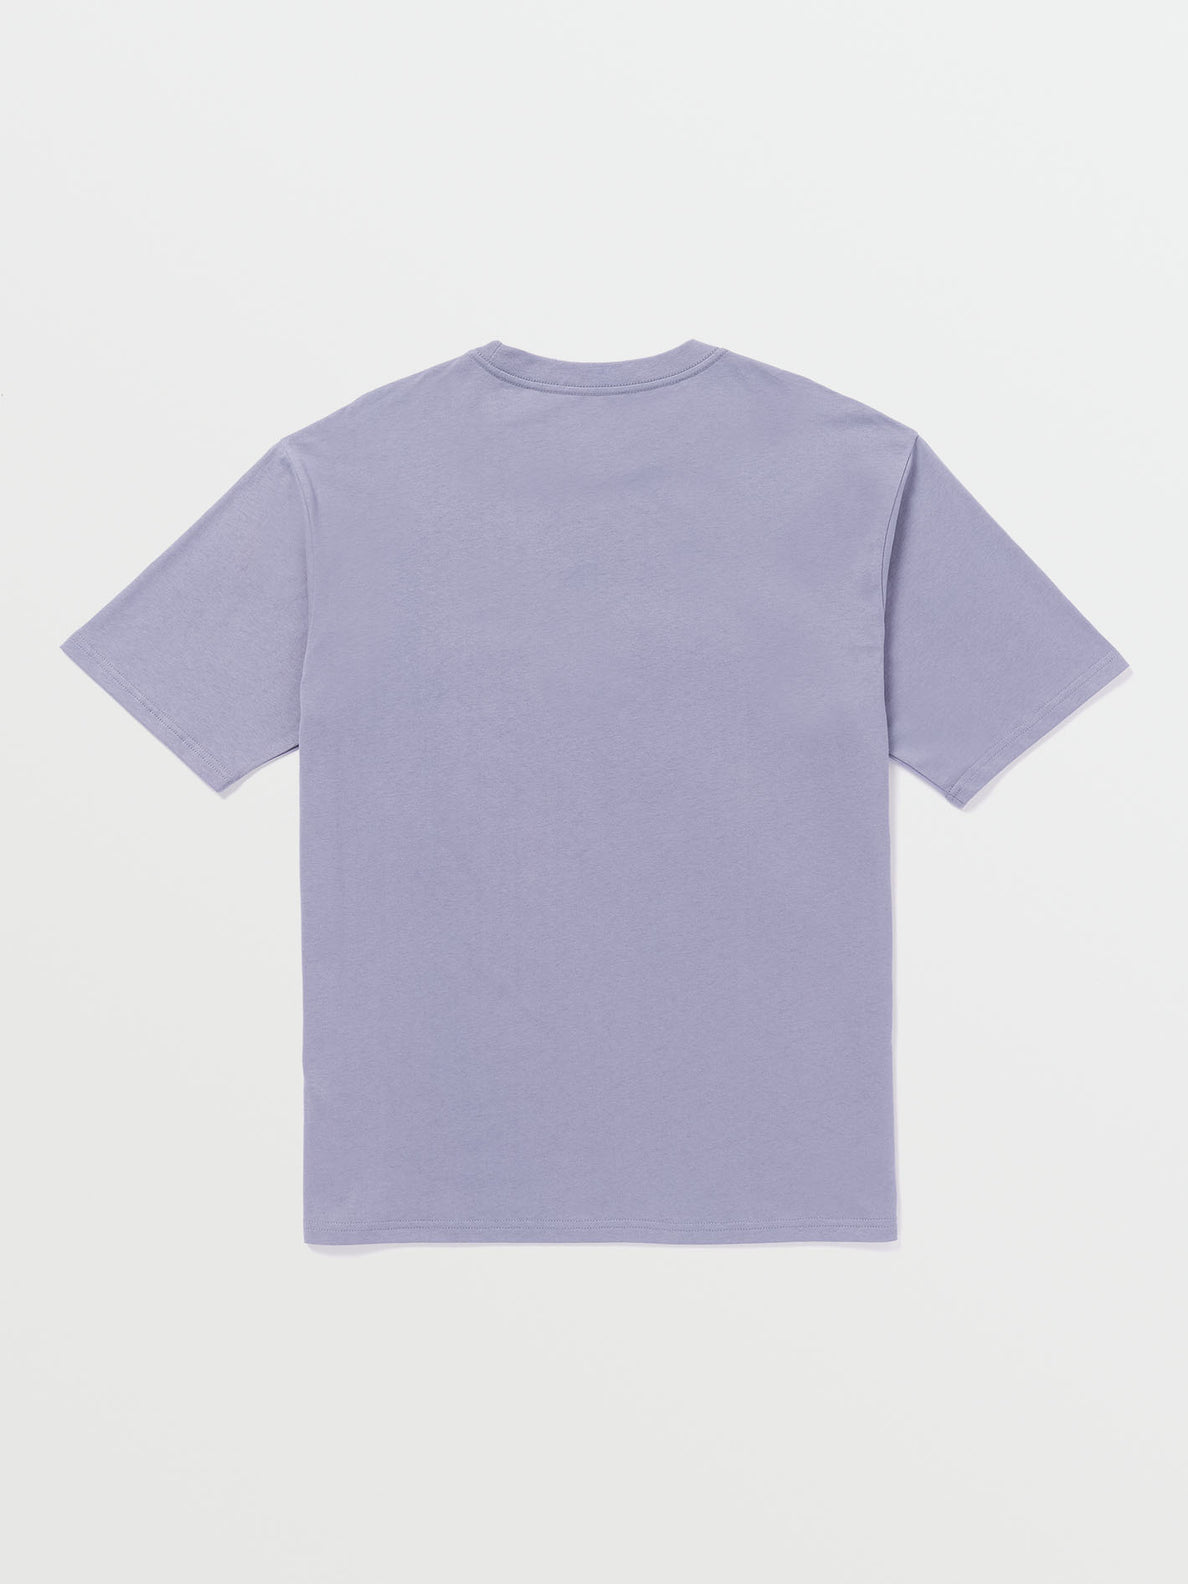 Boxy Blank Short Sleeve Tee - Violet Dust